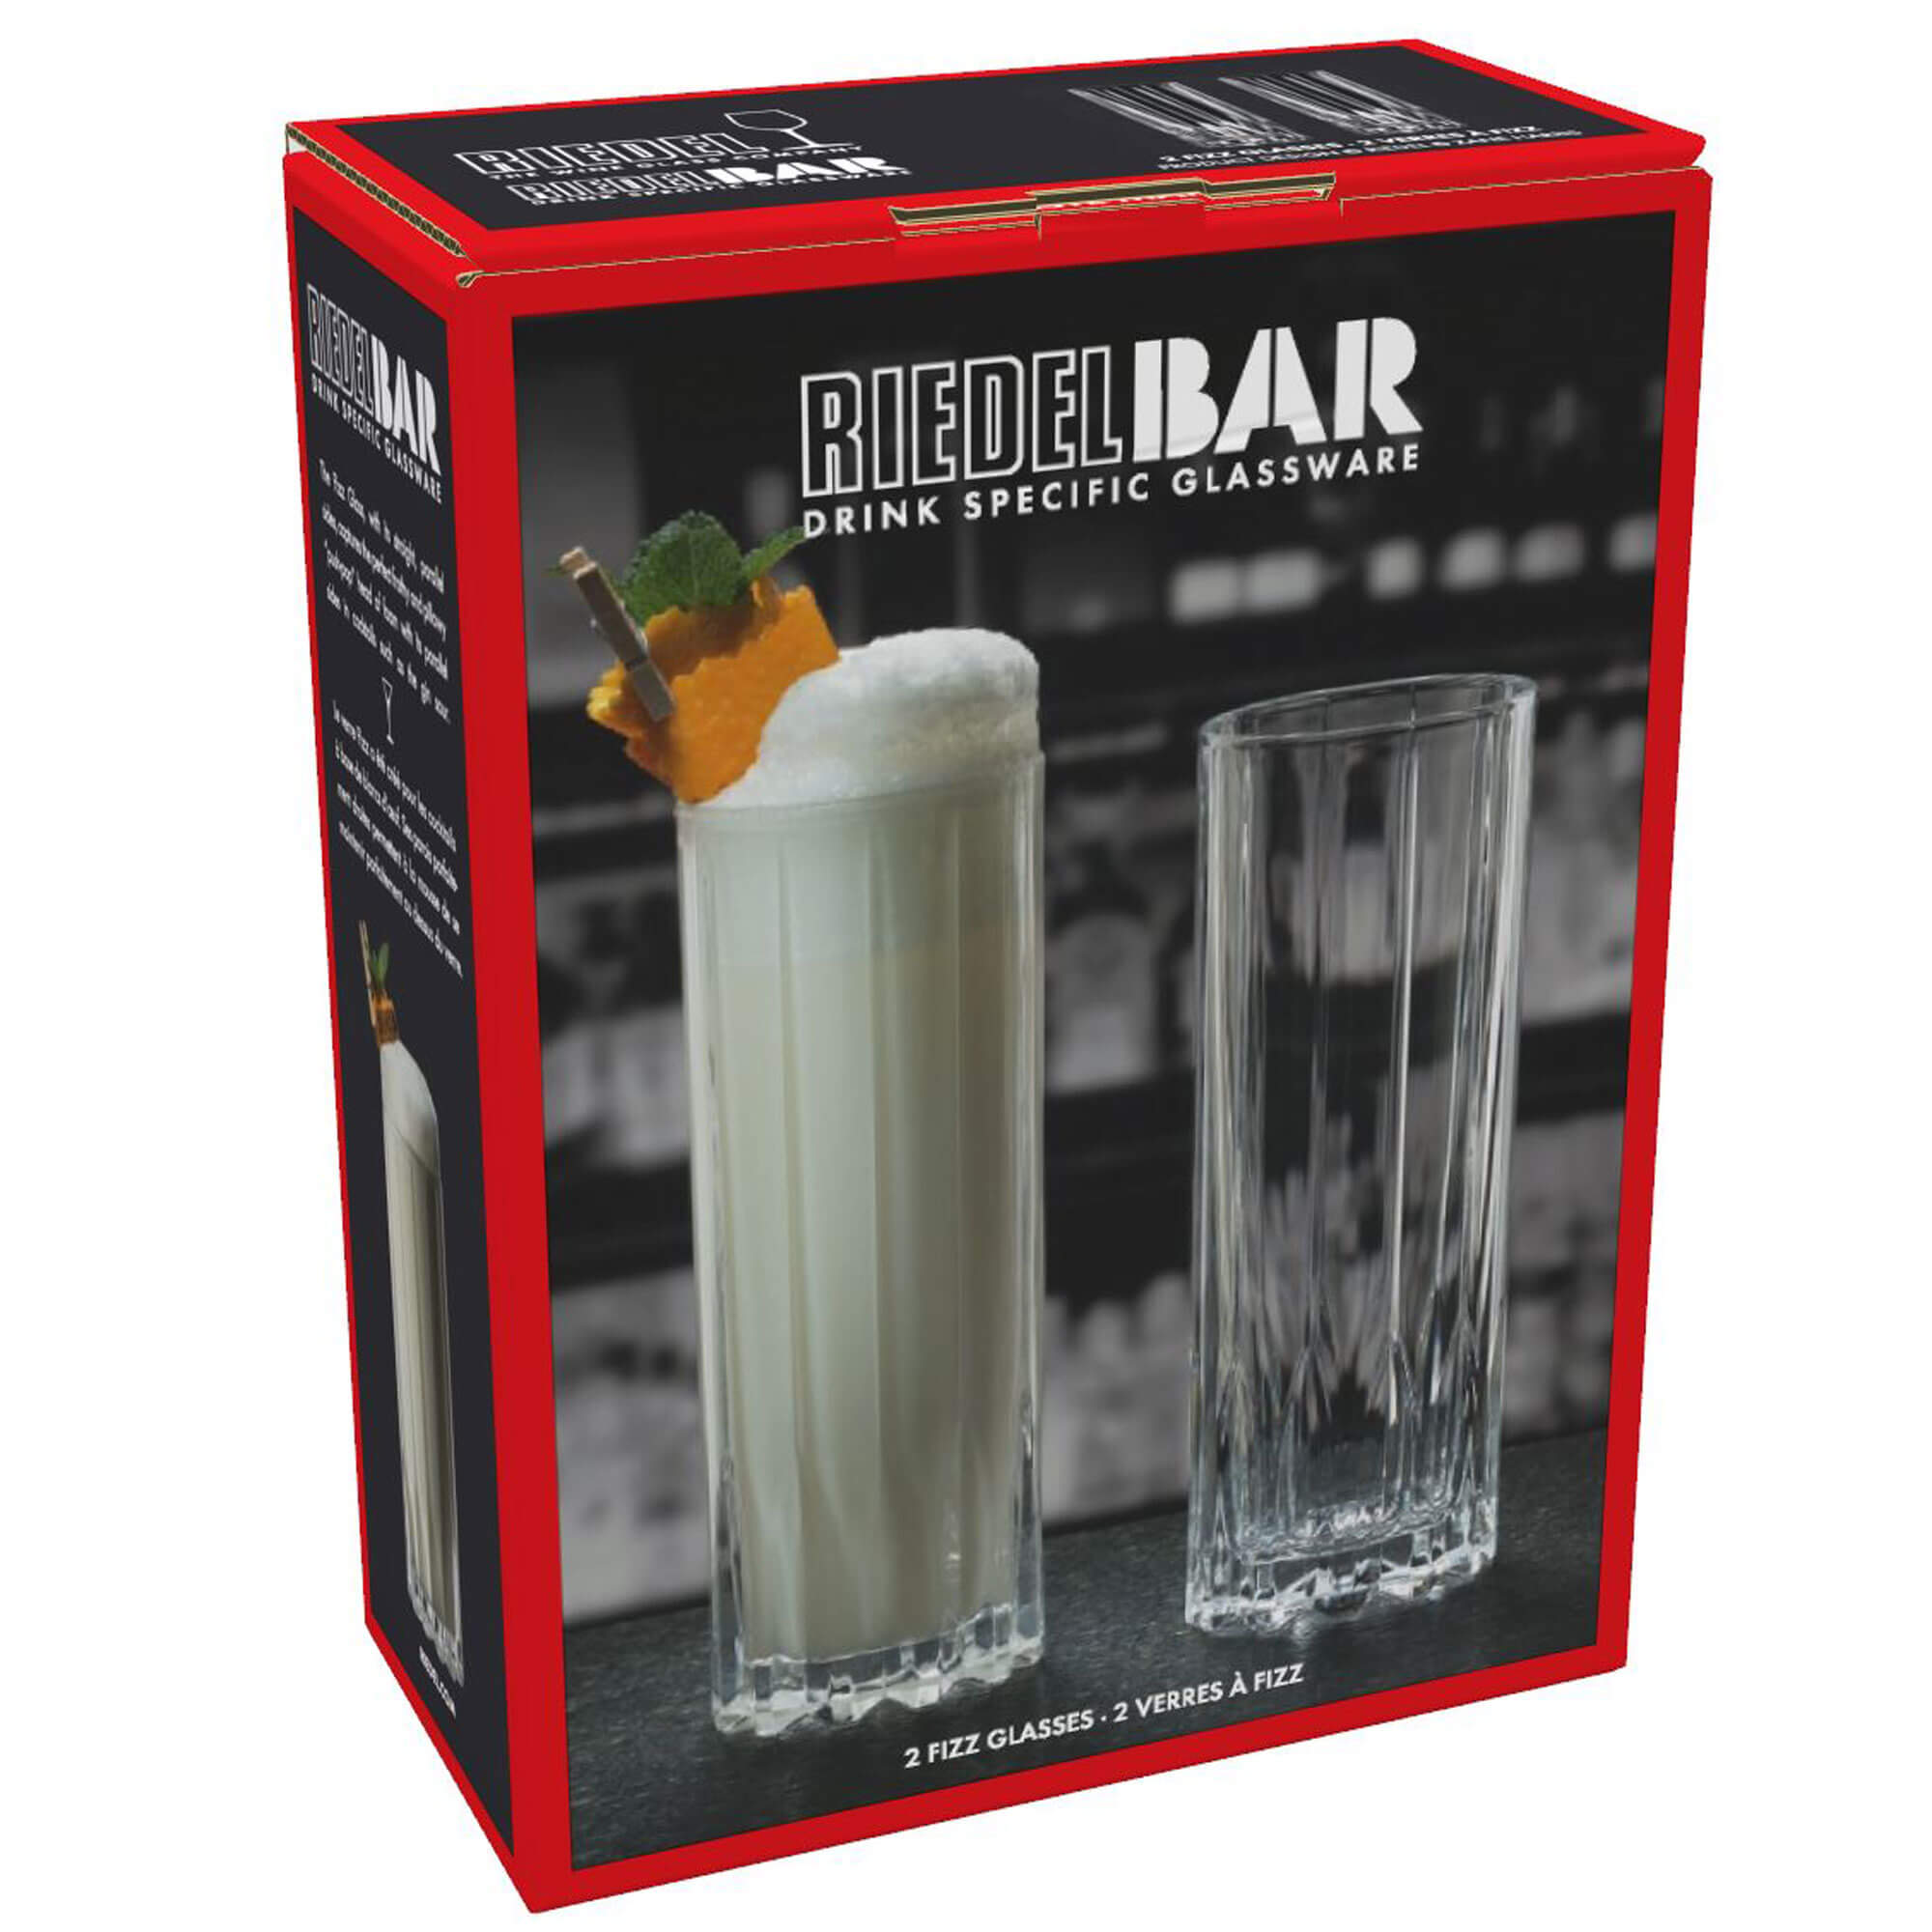 Fizz glass Drink Specific Glassware, Riedel Bar (2 pcs.)